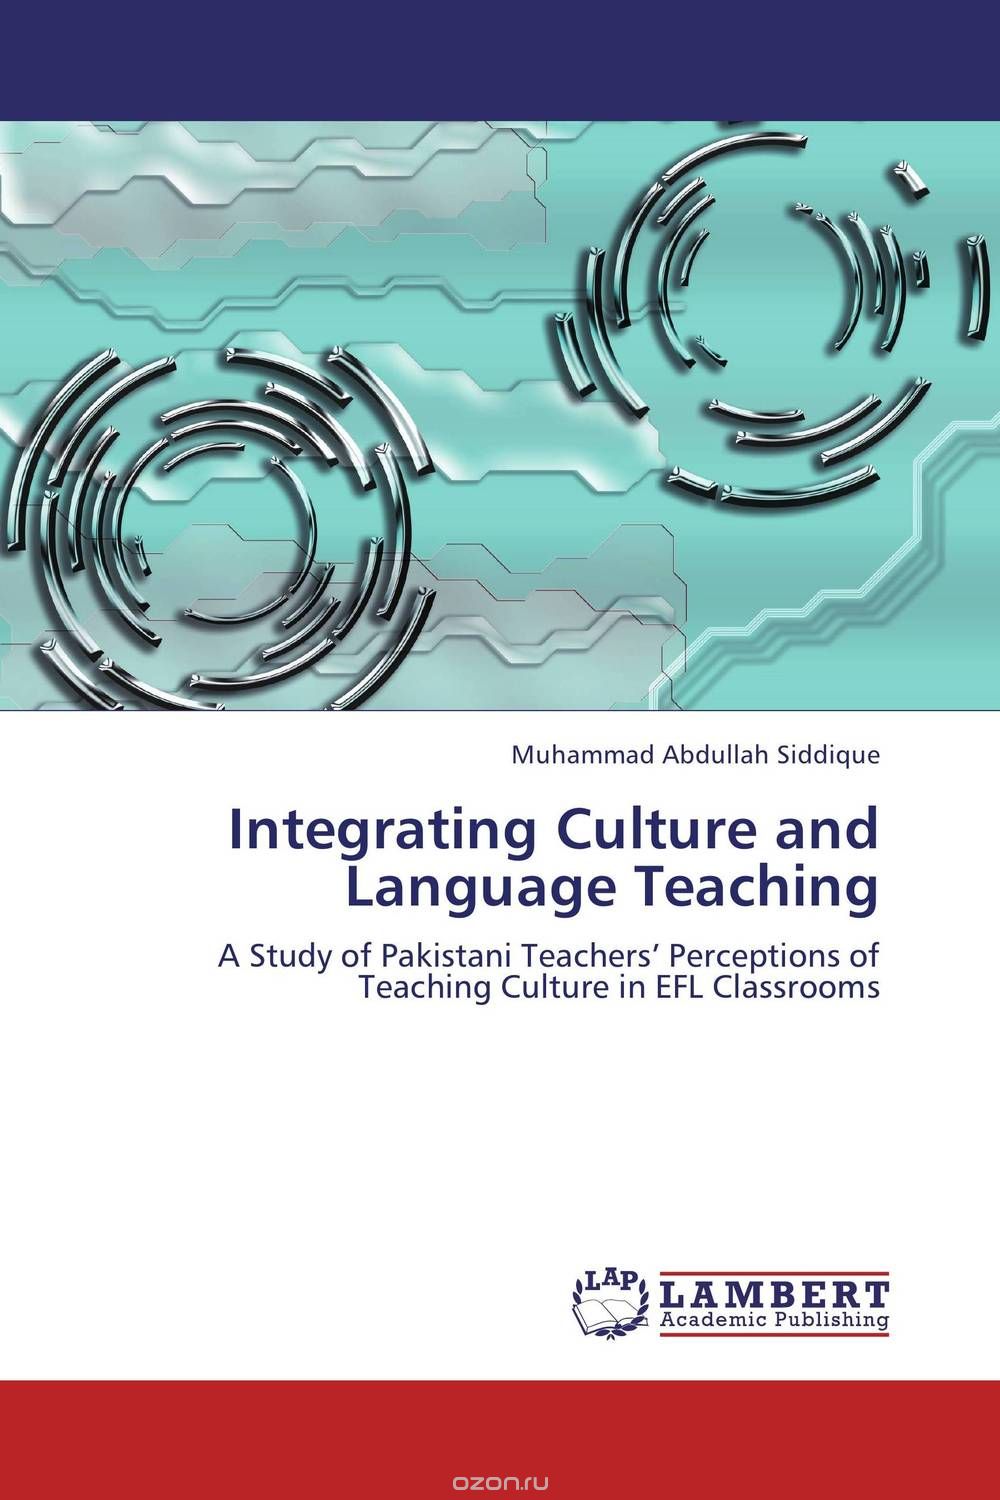 Скачать книгу "Integrating Culture and Language Teaching"